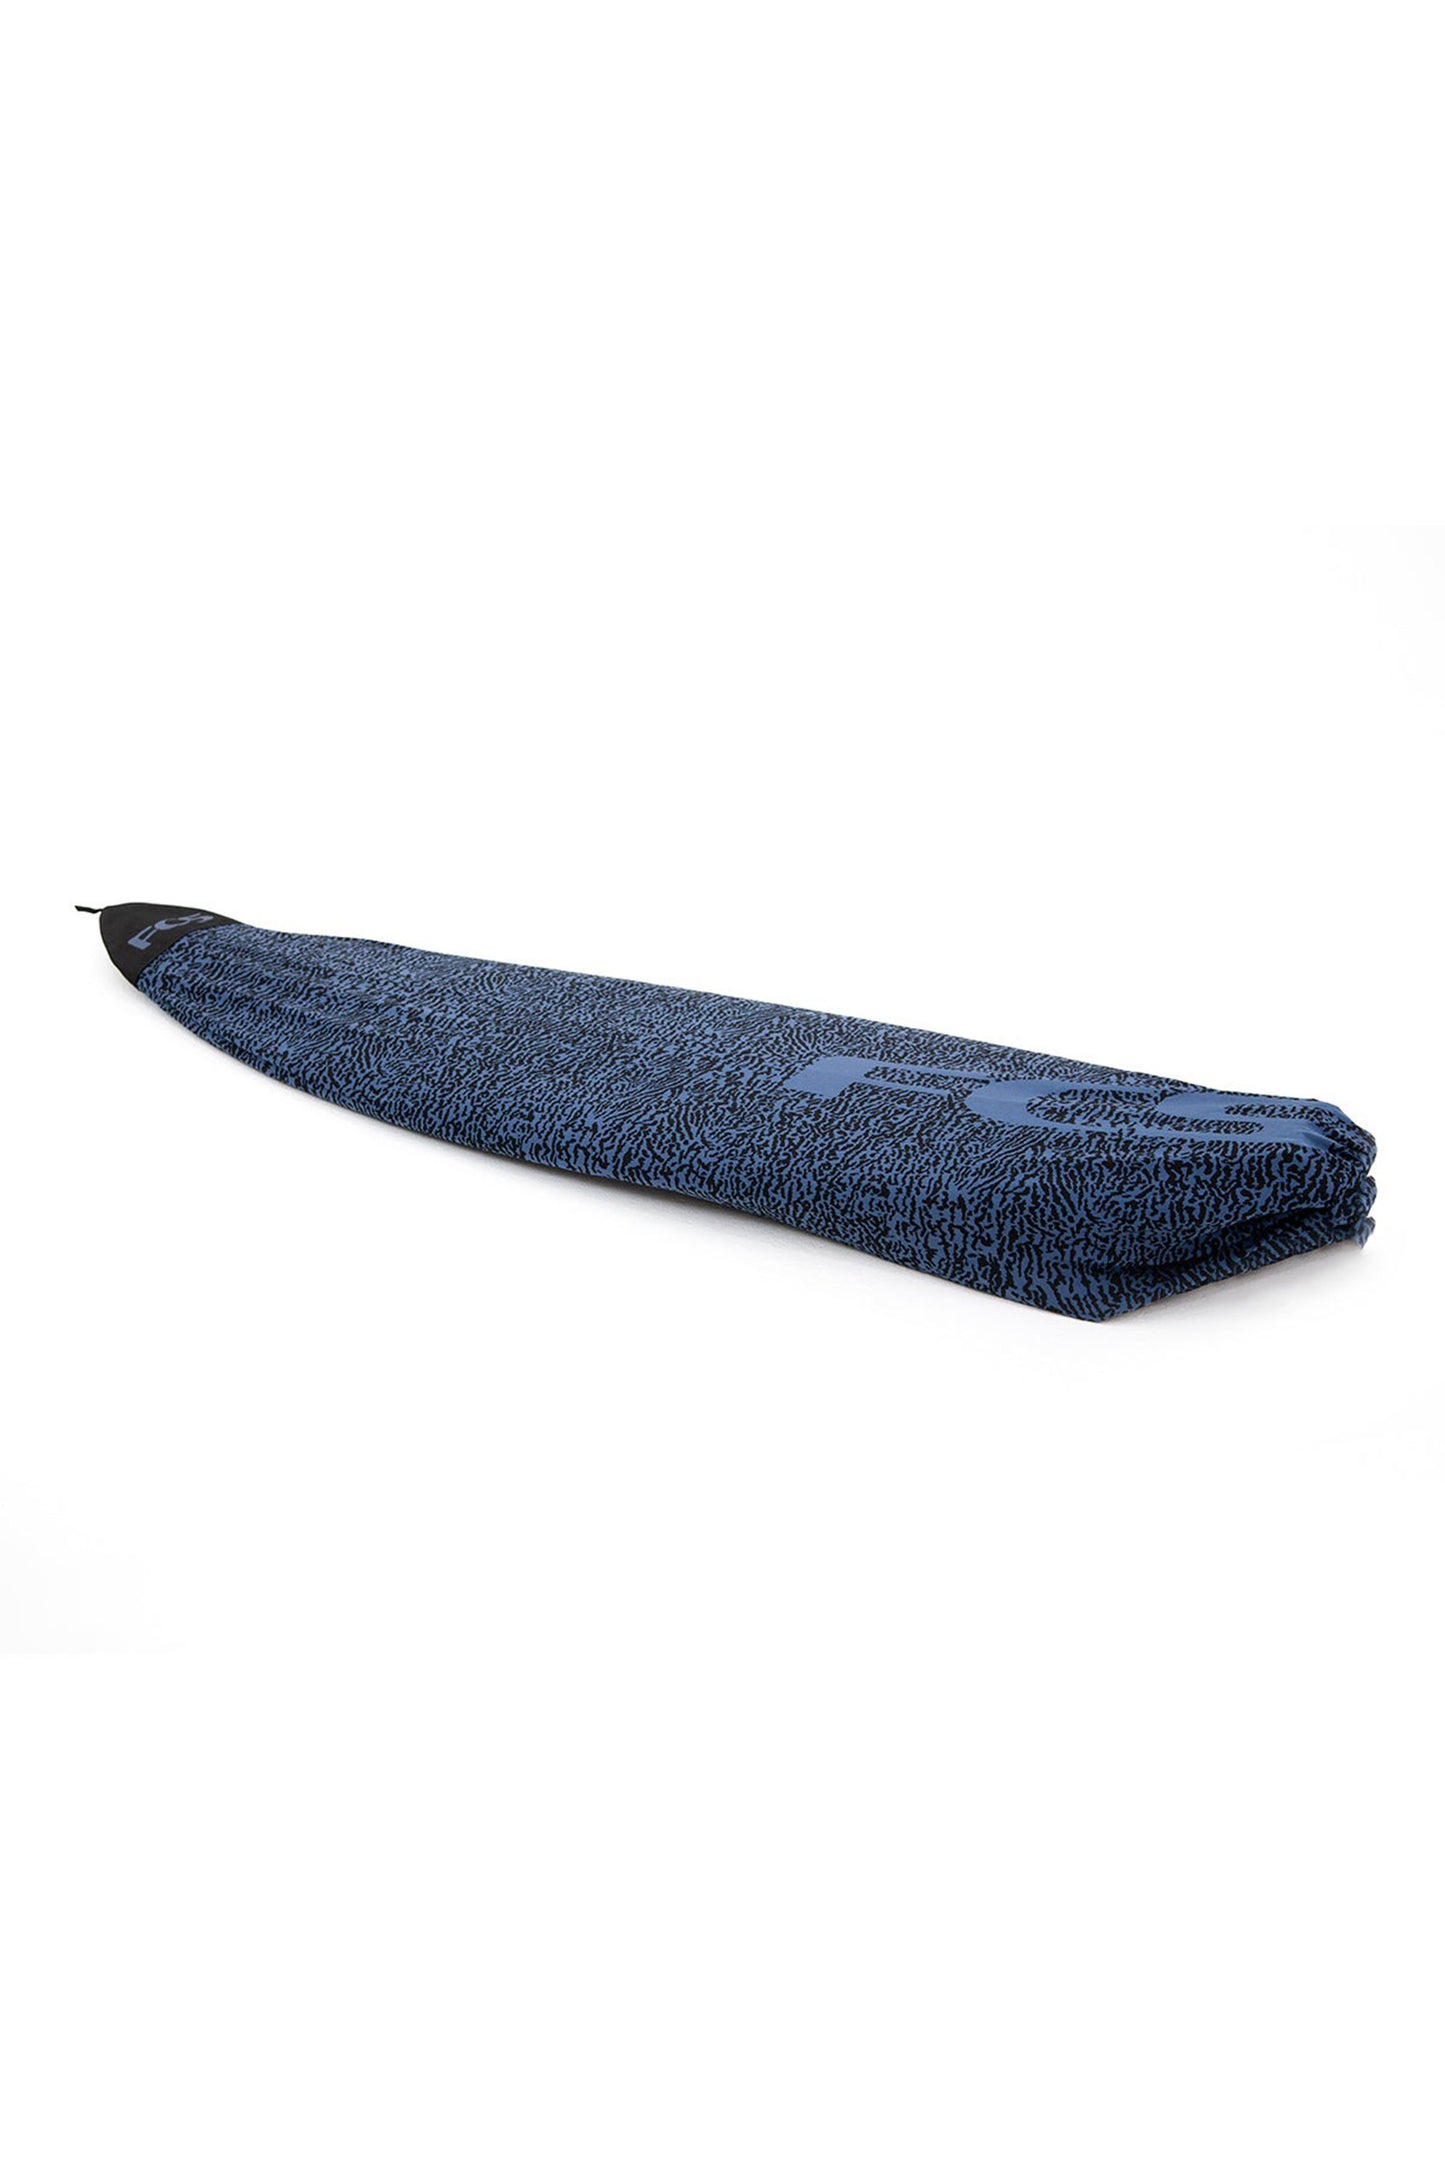 Pukas-Surf-Shop-FCS-boardbags-strech-all-purpose-stone-blue